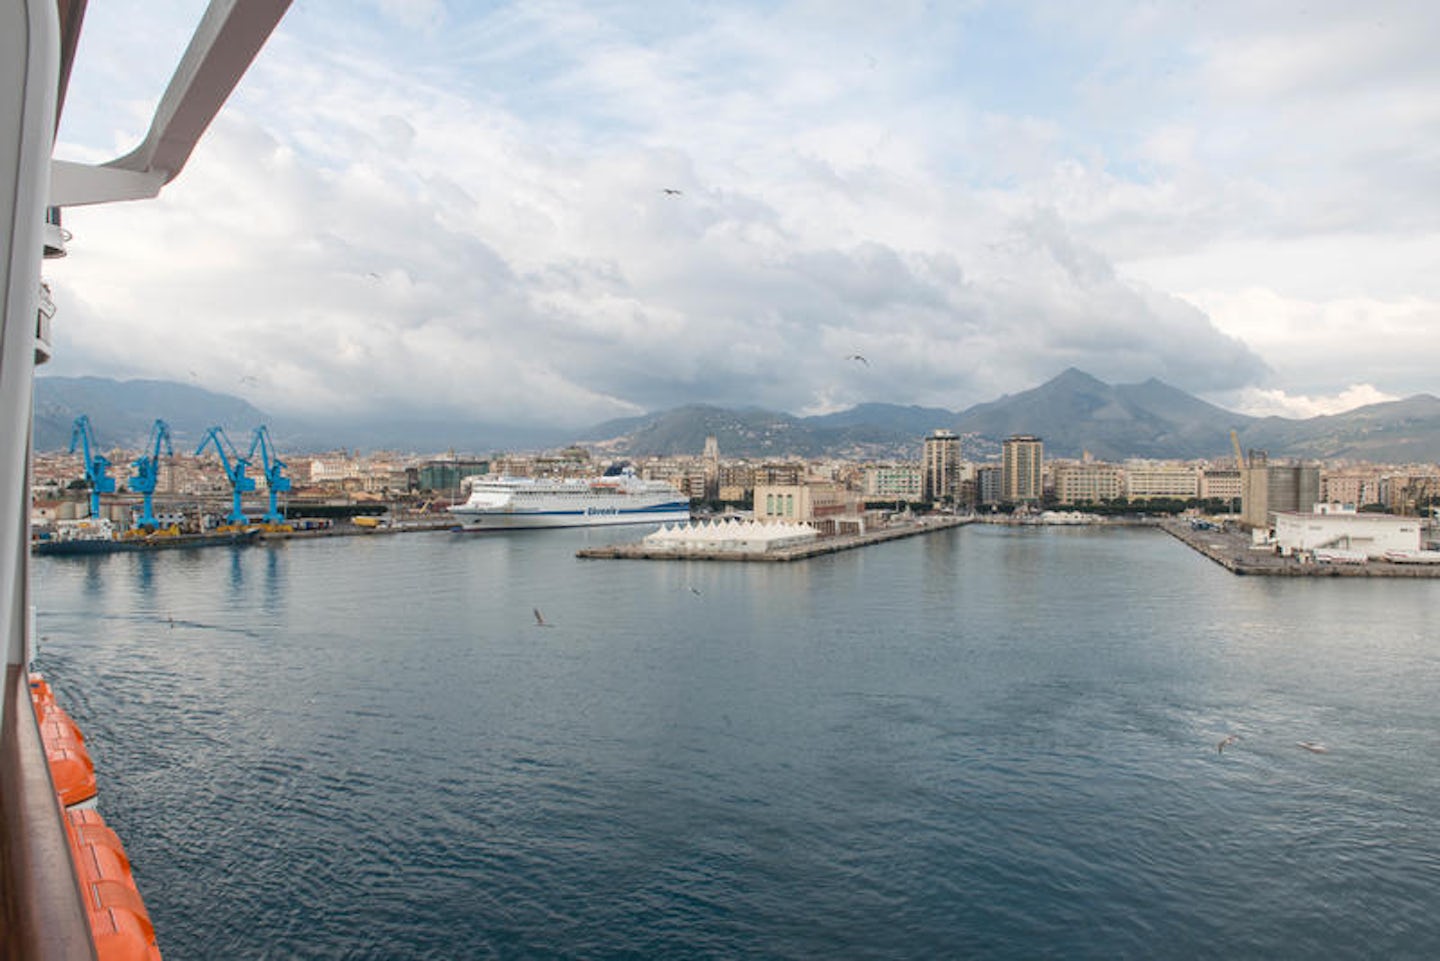 Palermo Cruise Port